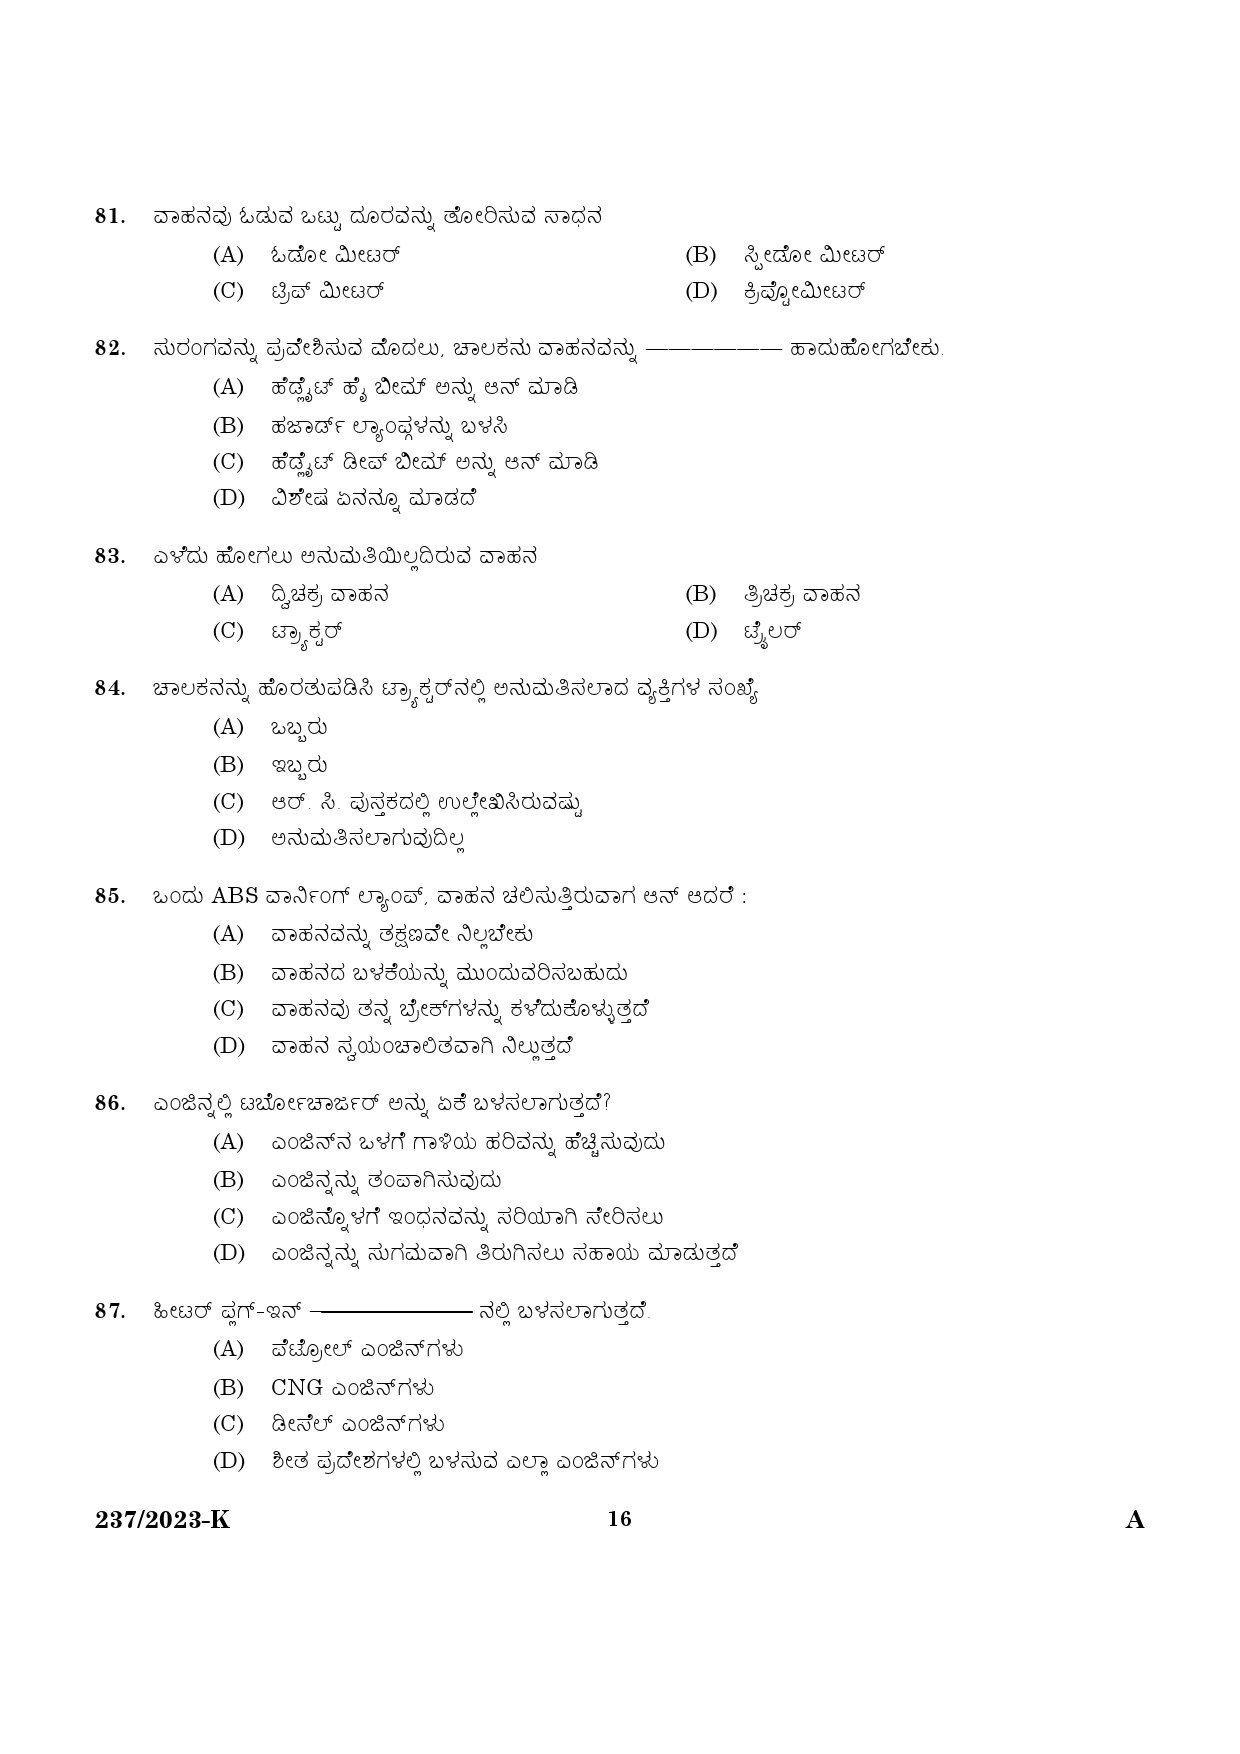 KPSC Forest Driver Kannada Exam 2023 Code 2372023 K 14